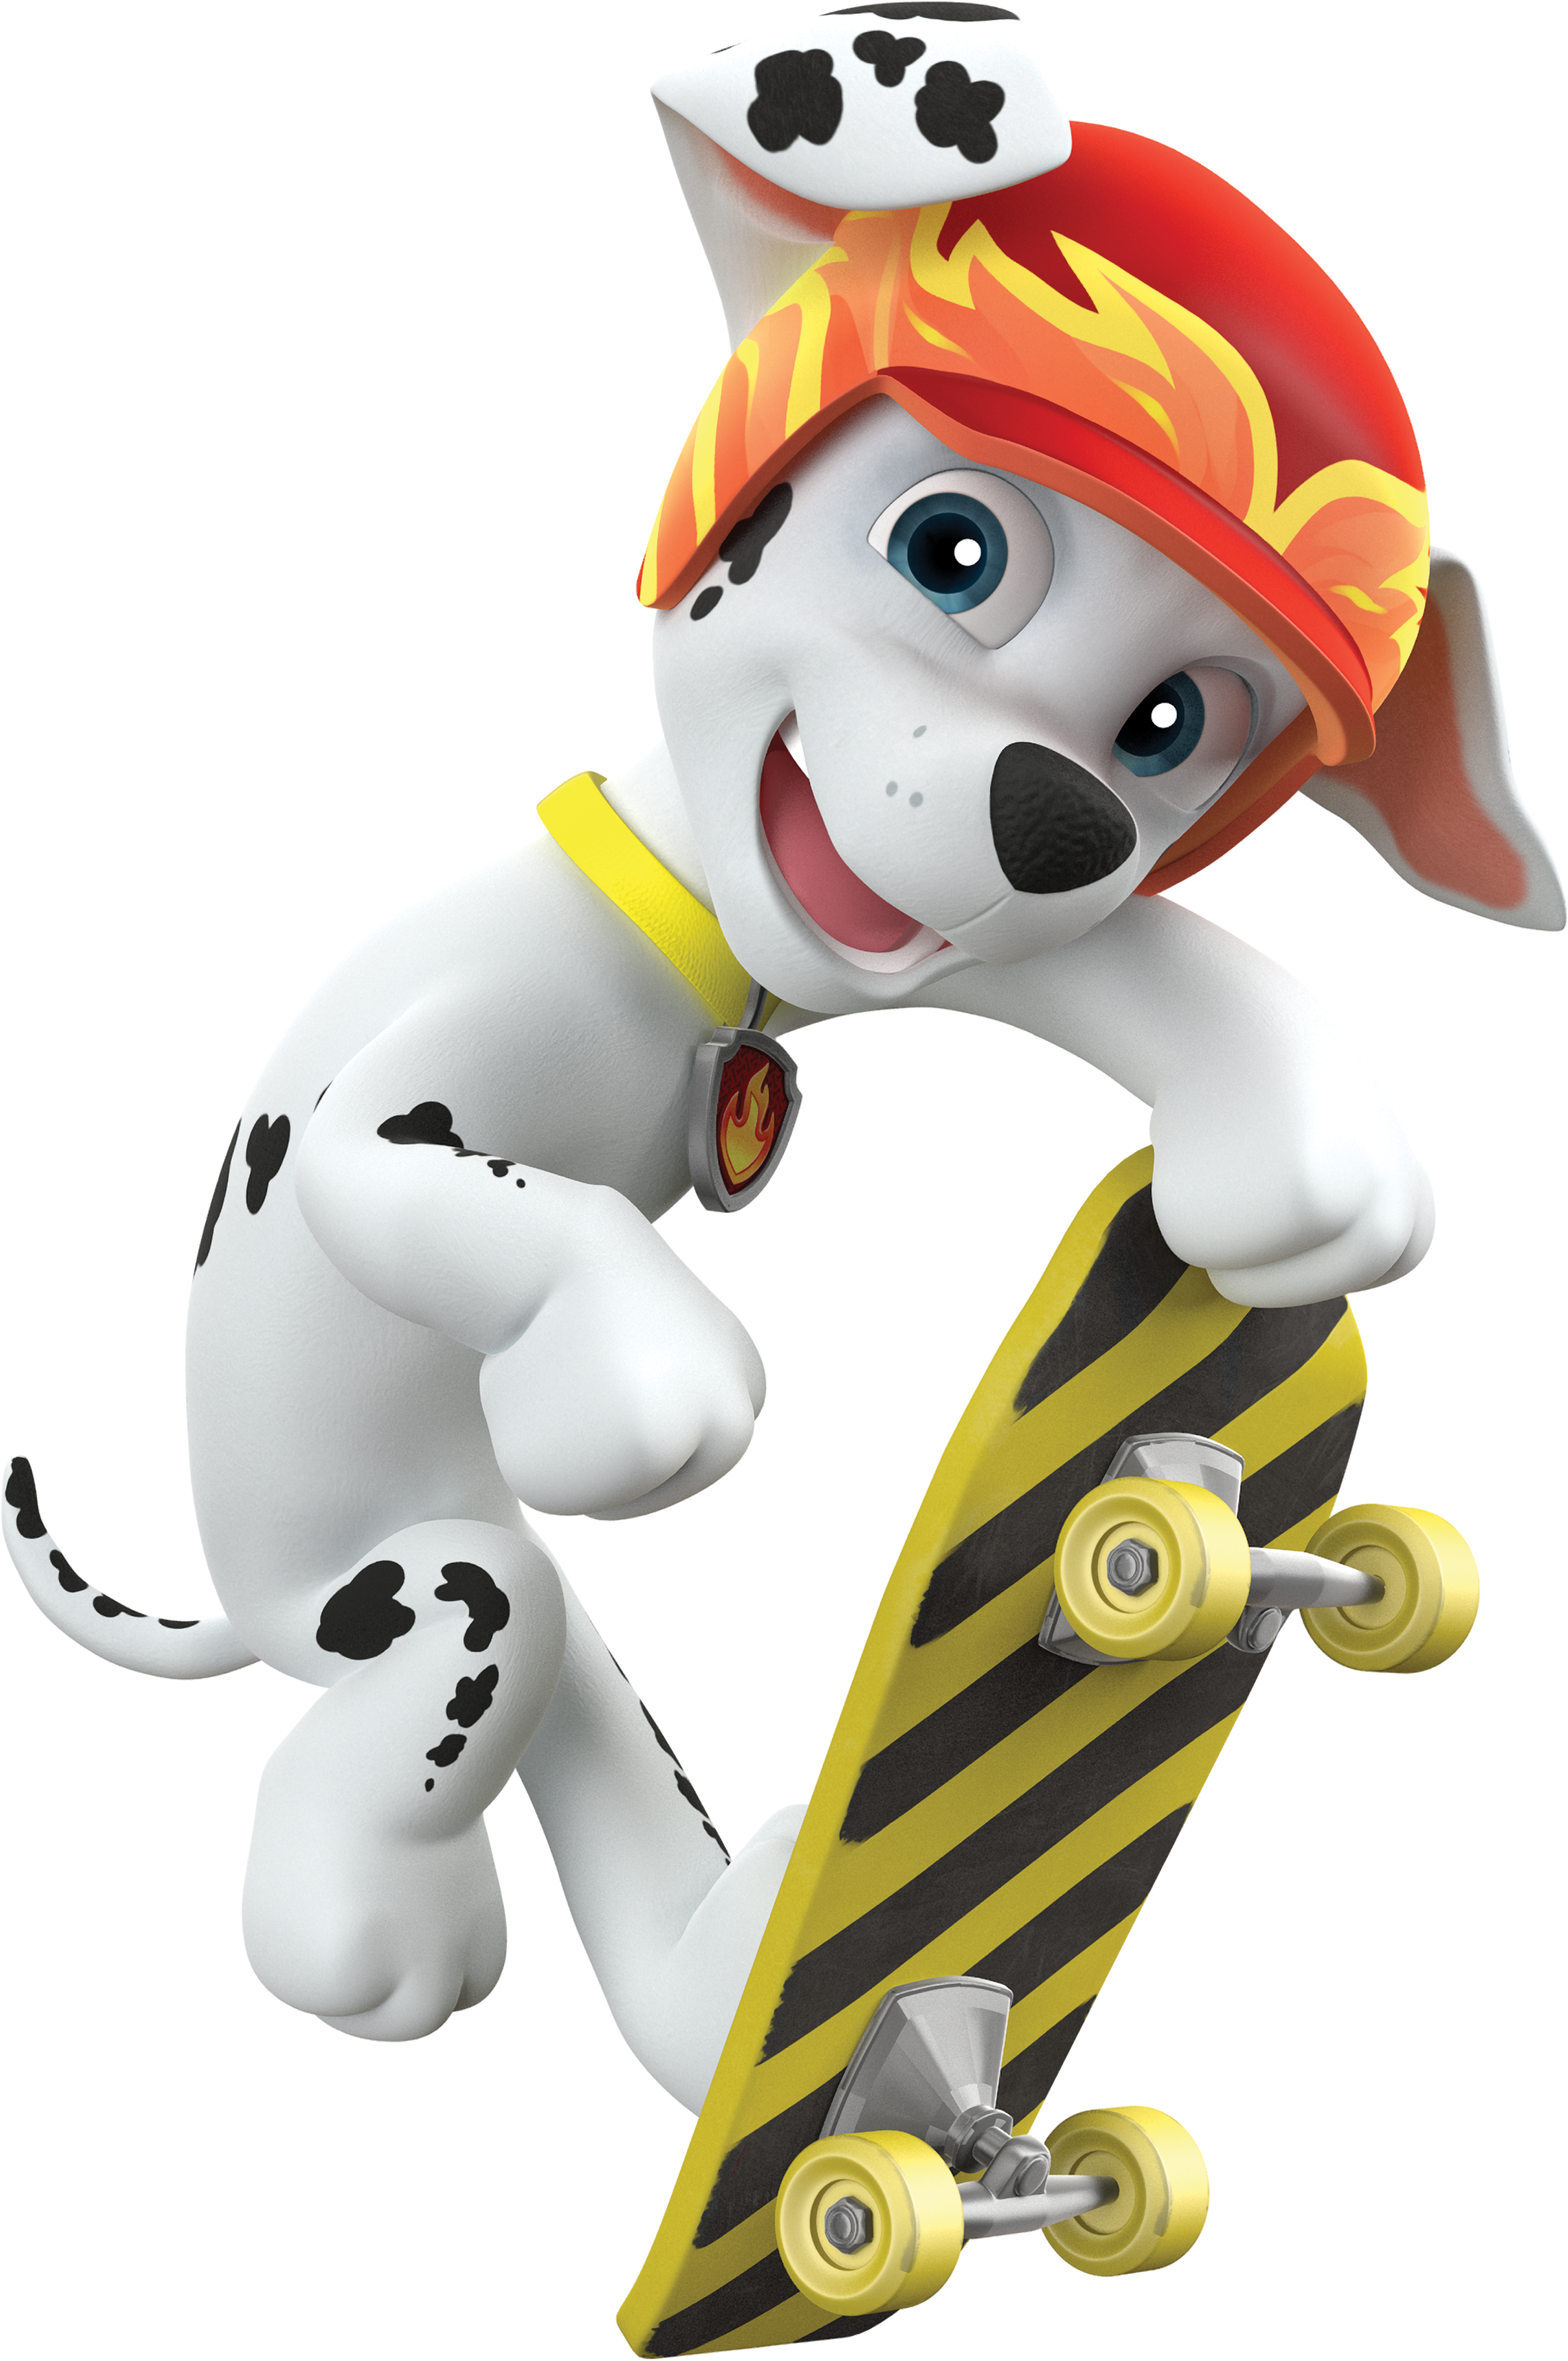 A Cartoon Dog With A Hat And A Skateboard